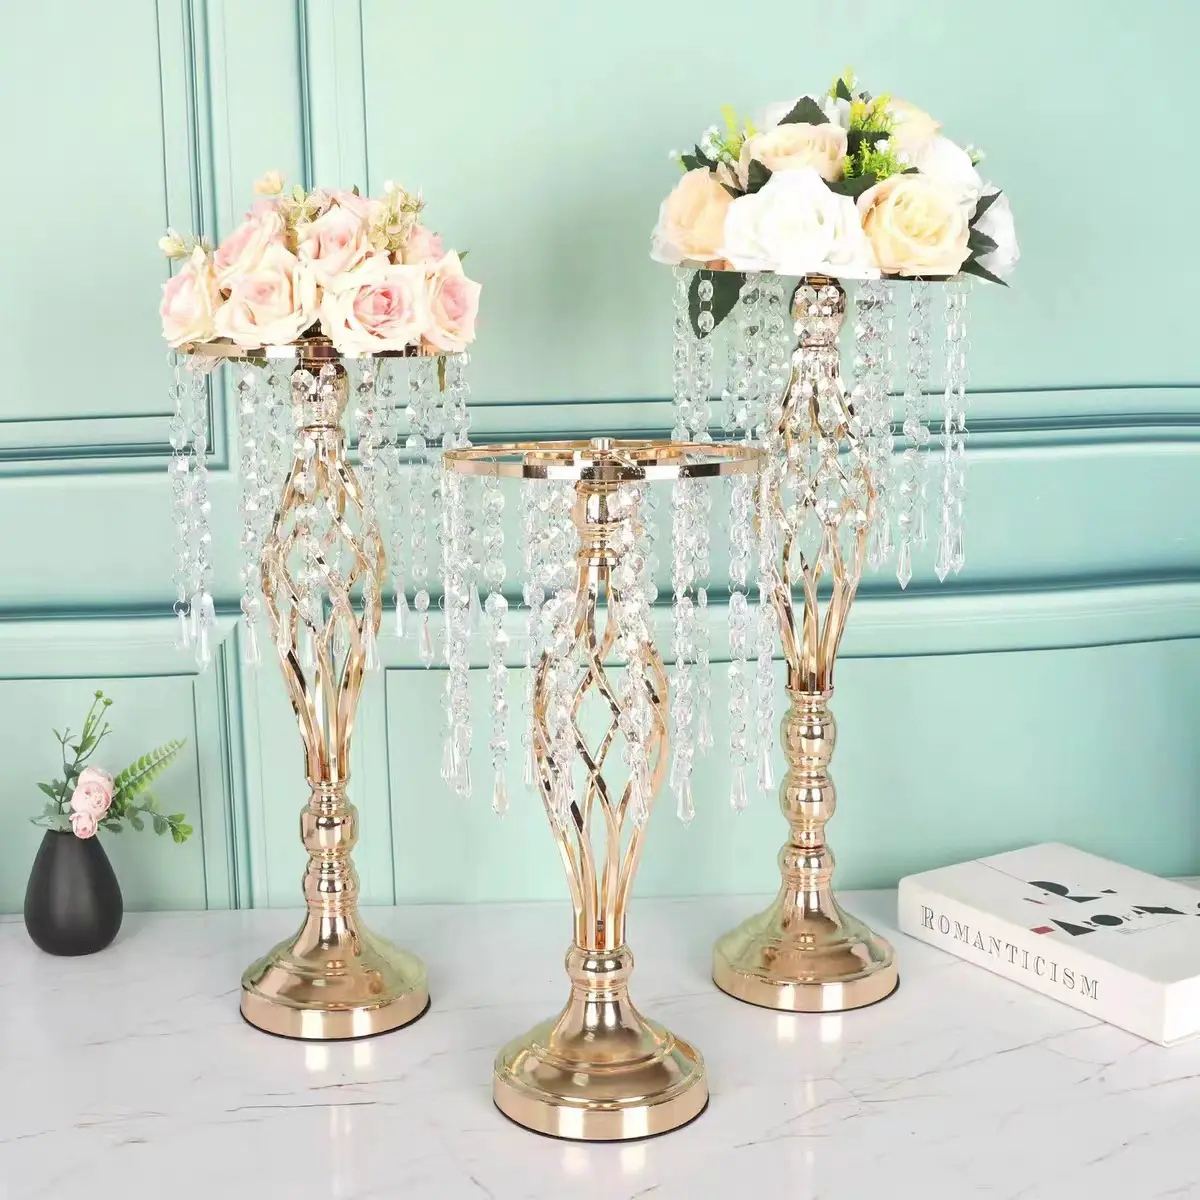 NISEVEN Centros de mesa creativos para bodas Decoraciones de mesa Metal Oro Plata Flores Soporte con candelabro de cristal